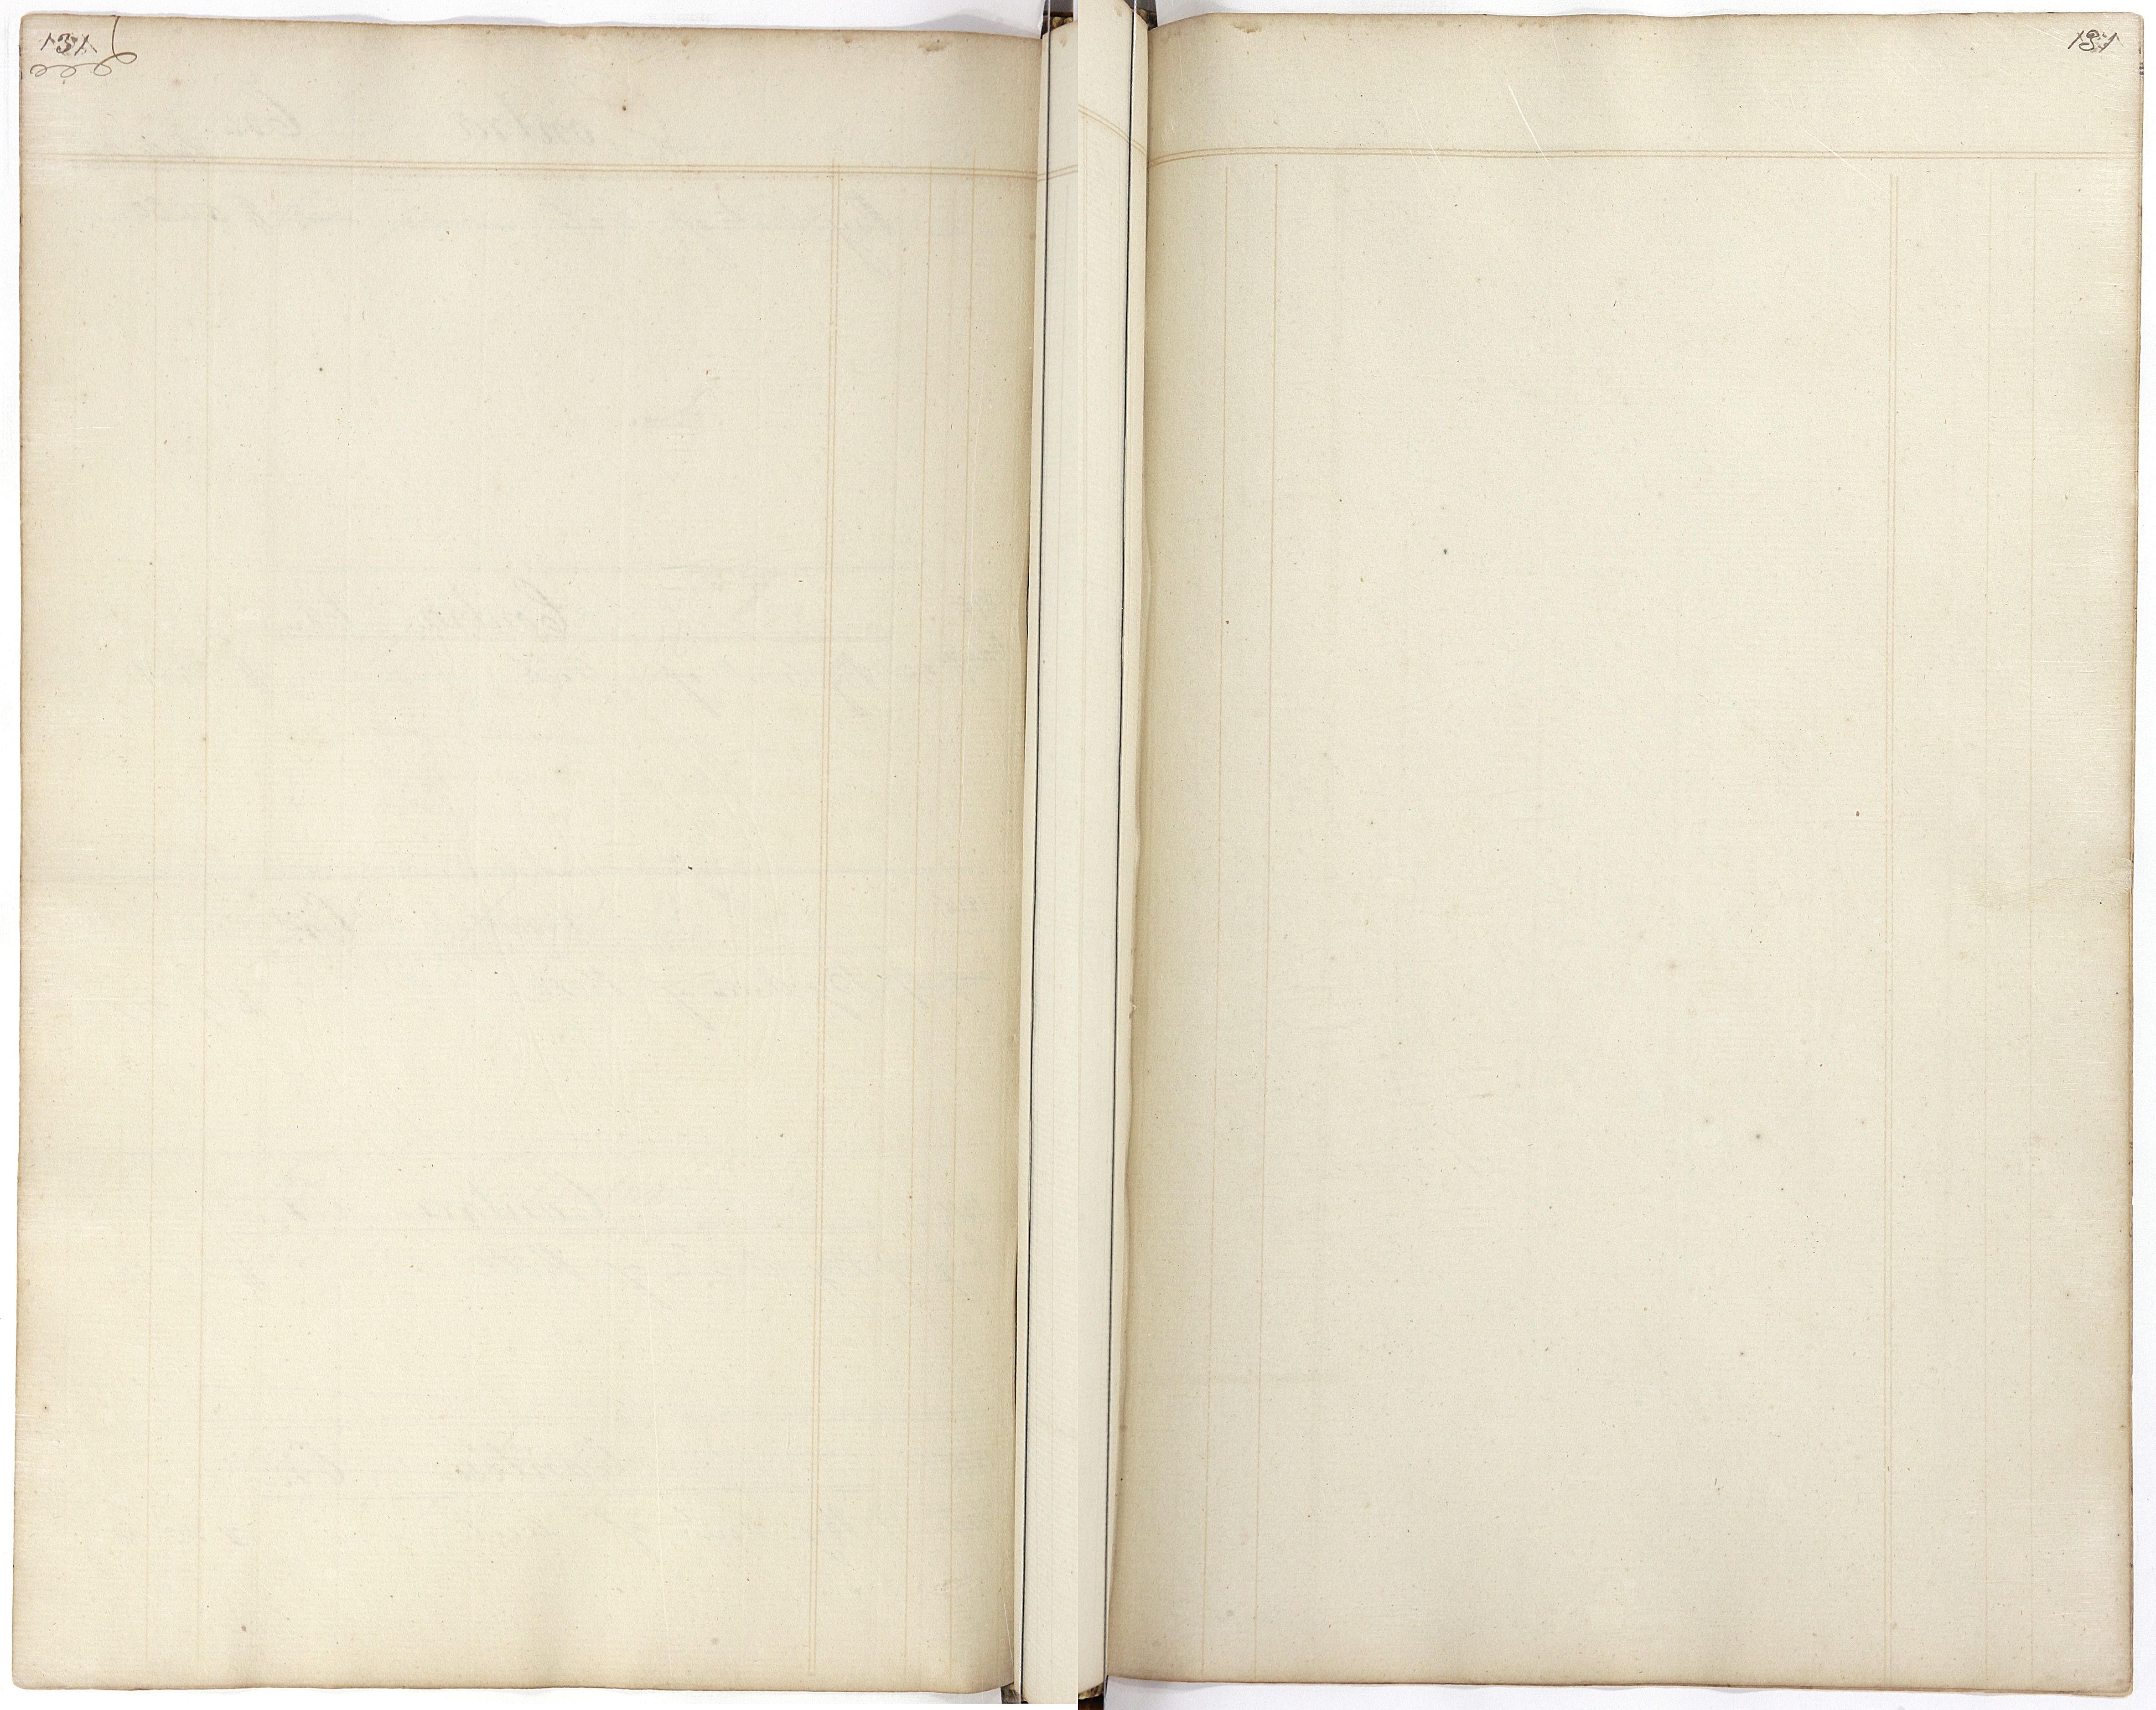 Image of Folio 131 (transcription below)